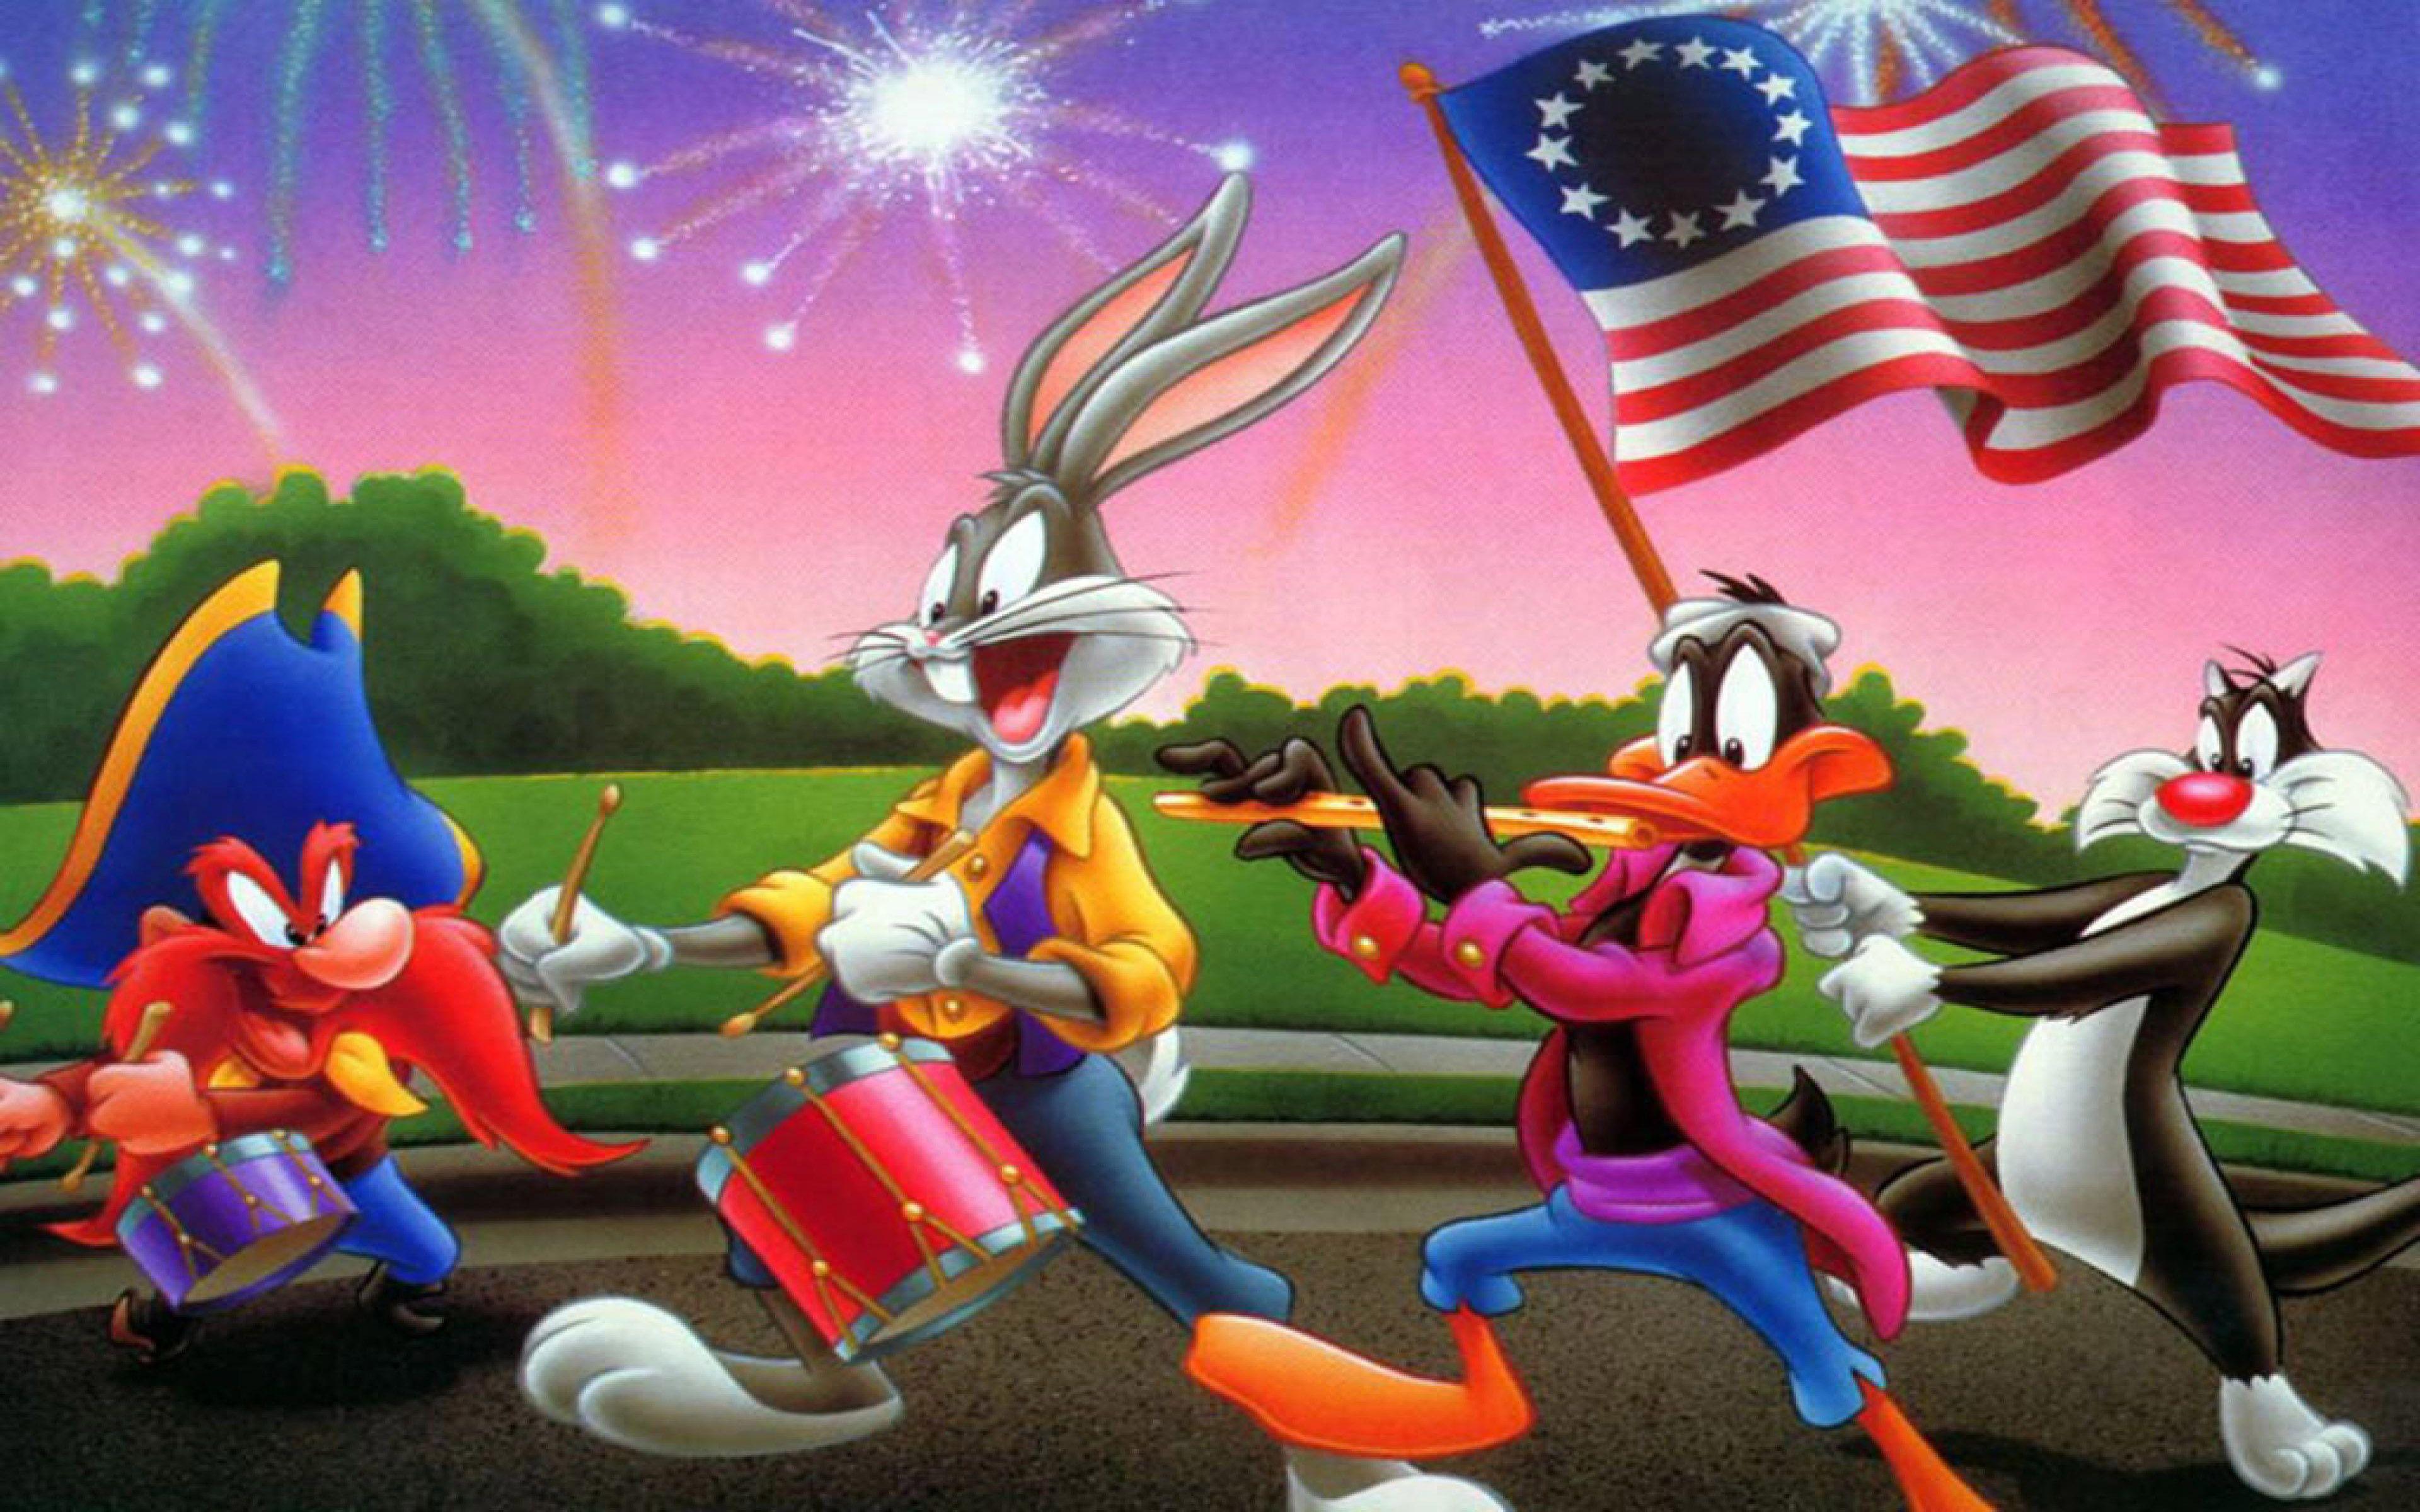 Cartoon Looney Tunes 4th Of July Yosemite Sam Bugs Bunny Daffy